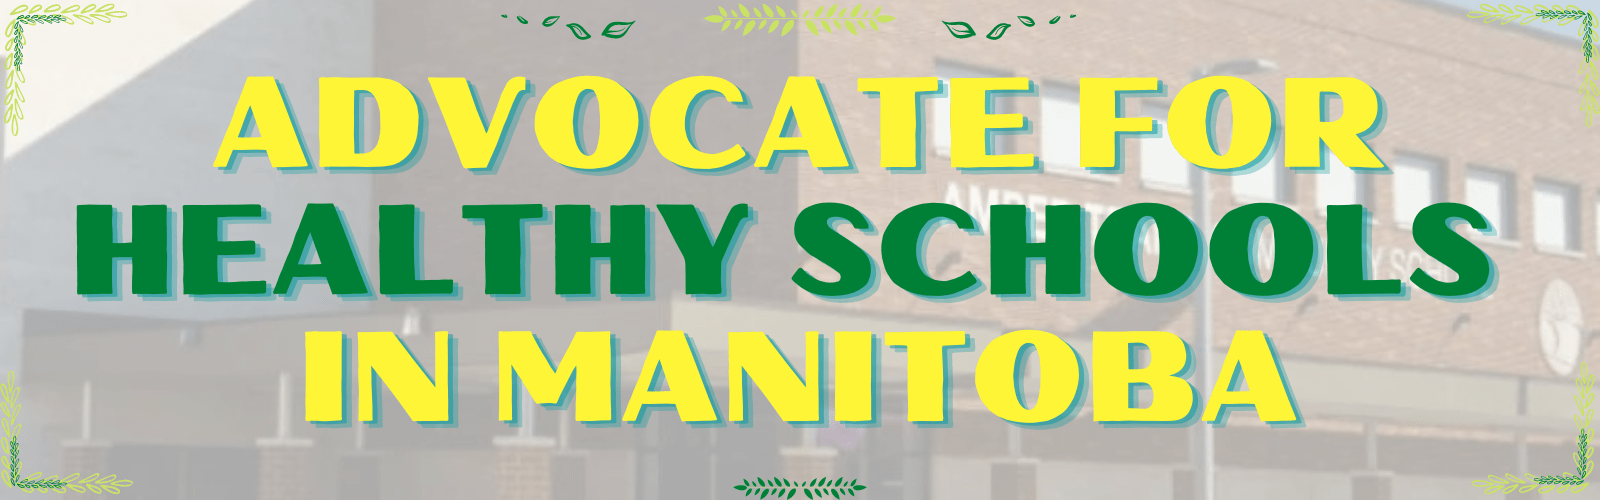 Advocate for healthy schools in Manitoba